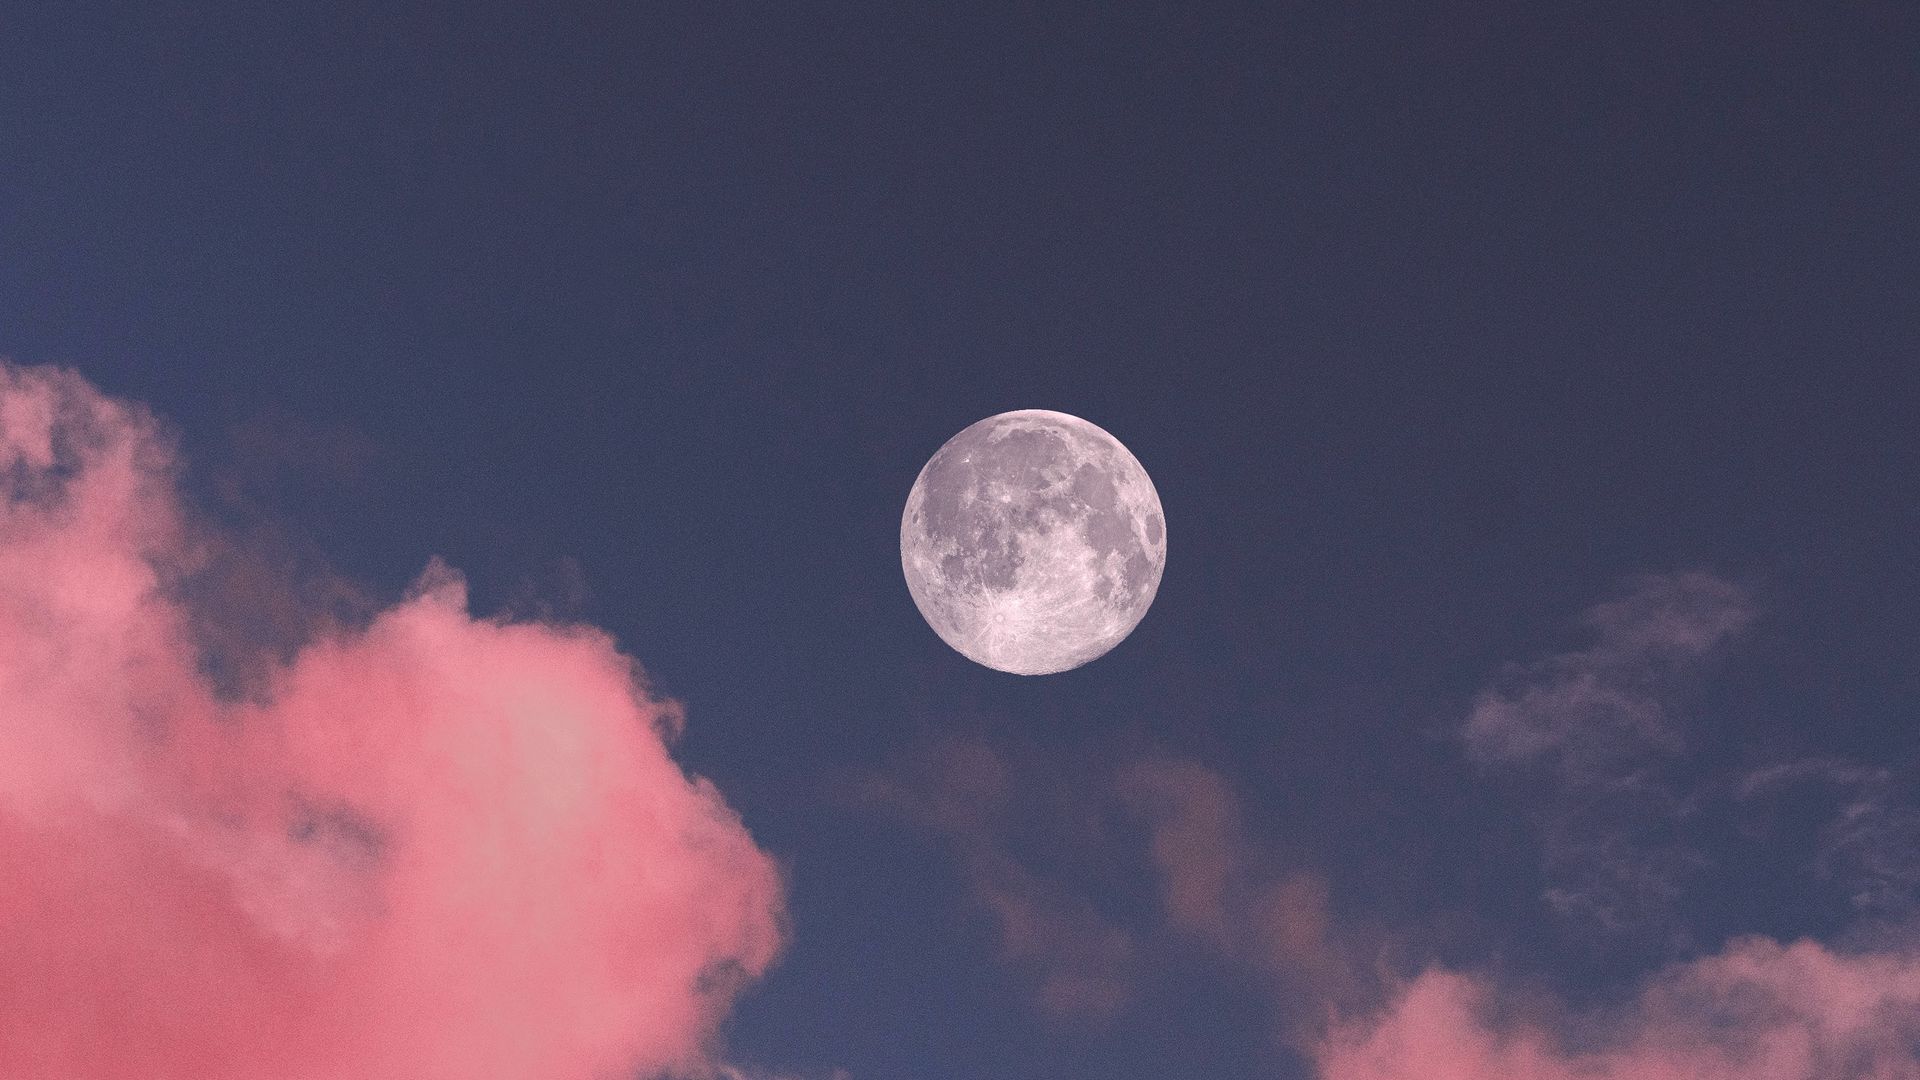 Download wallpaper 1920x1080 moon, clouds, pink, sky, full moon